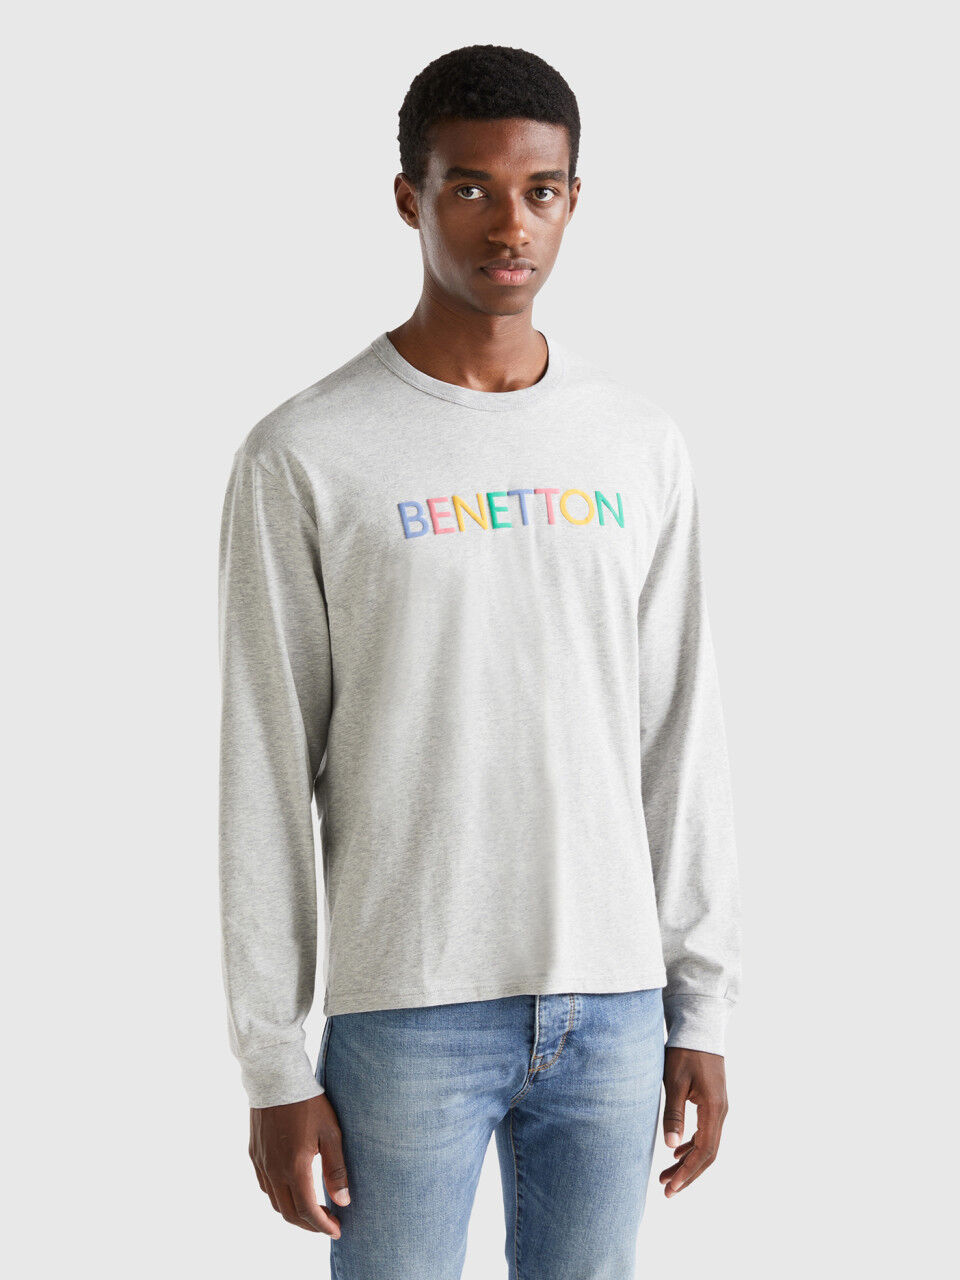 Frank Worthley infrastruktur skjorte Men's Long Sleeve T-shirts New Collection 2023 | Benetton